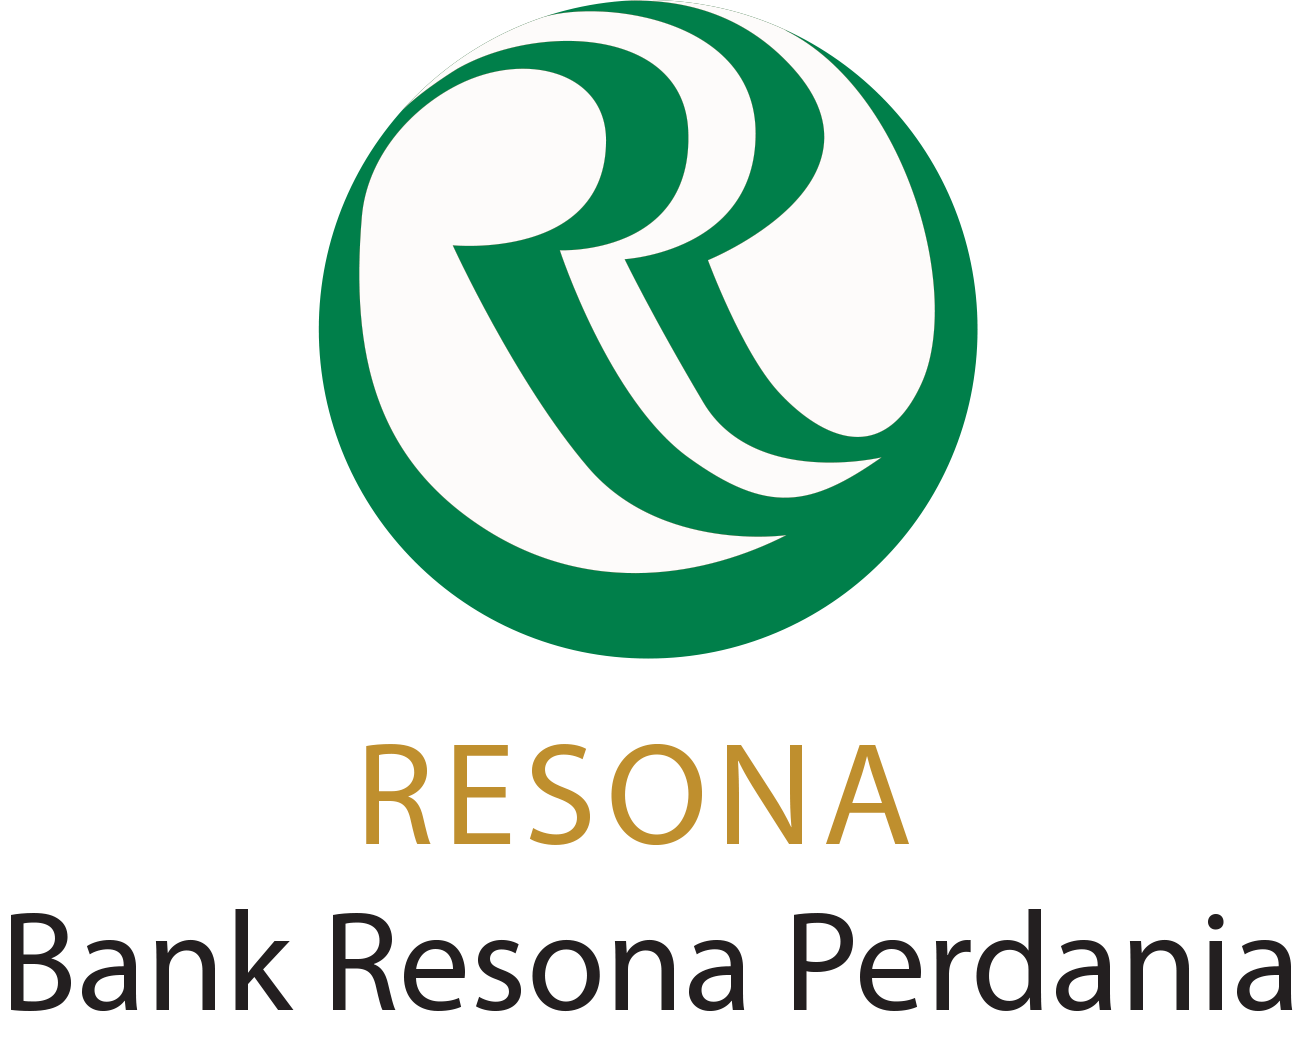 PT BANK RESONA PERDANIA